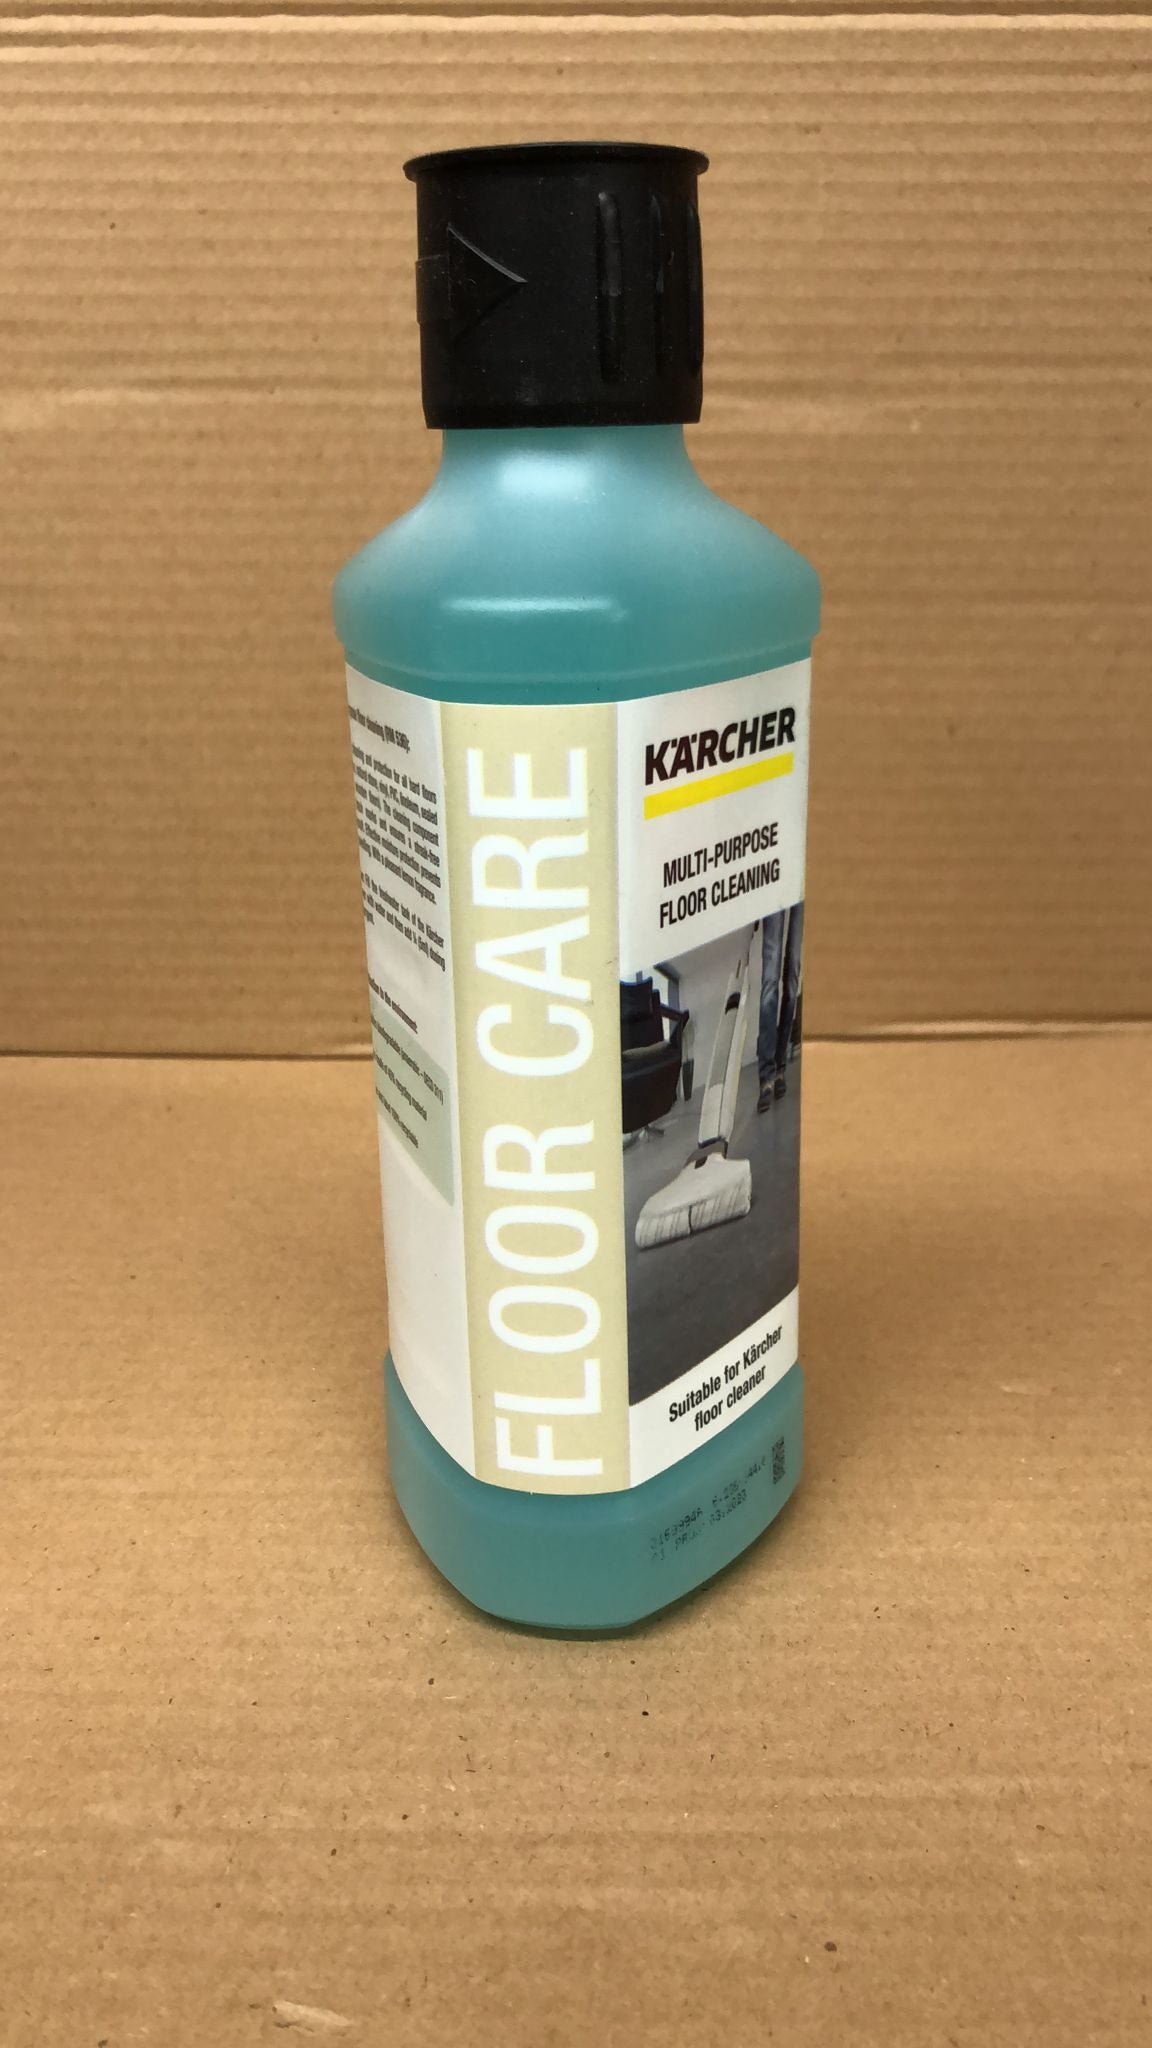 Karcher Detergent-Floor Cleaning  6.295-944.0" RM536 2326